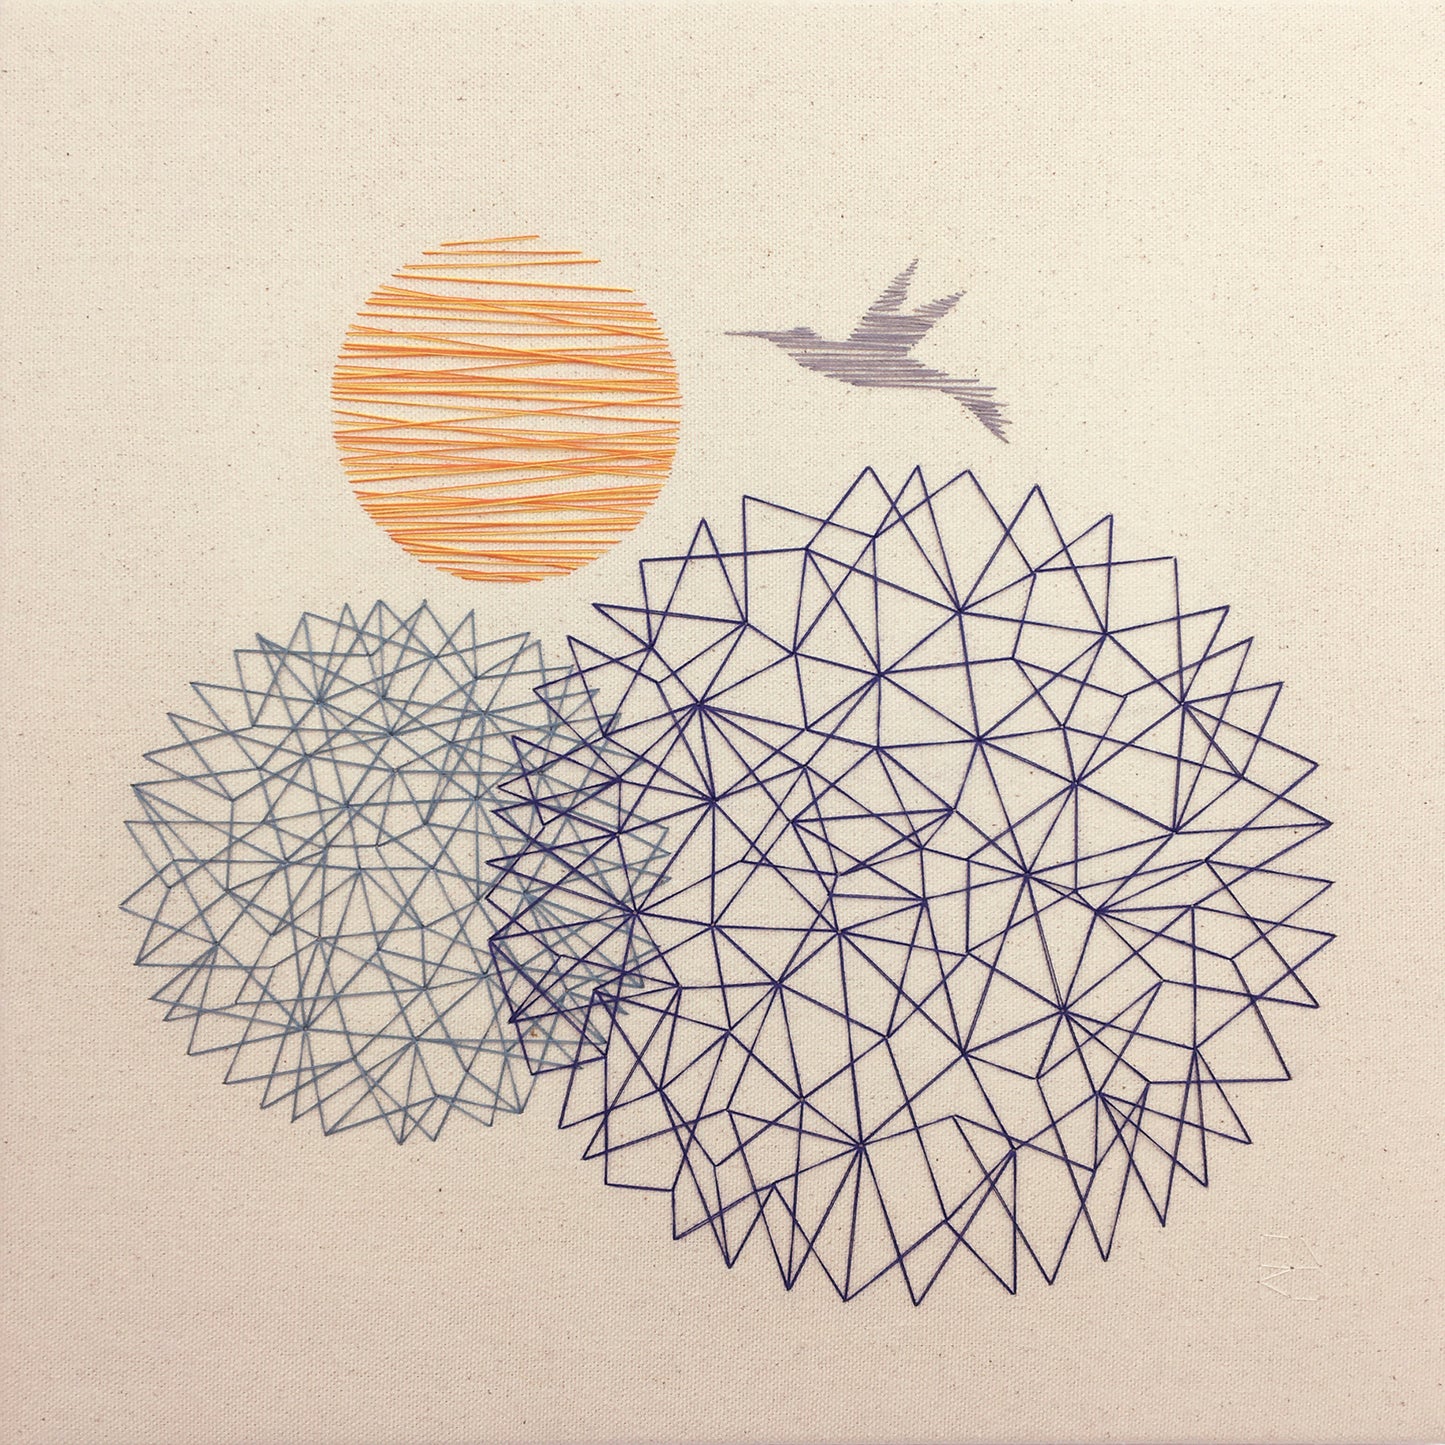 Circular Networks with Sun and Hummingbird